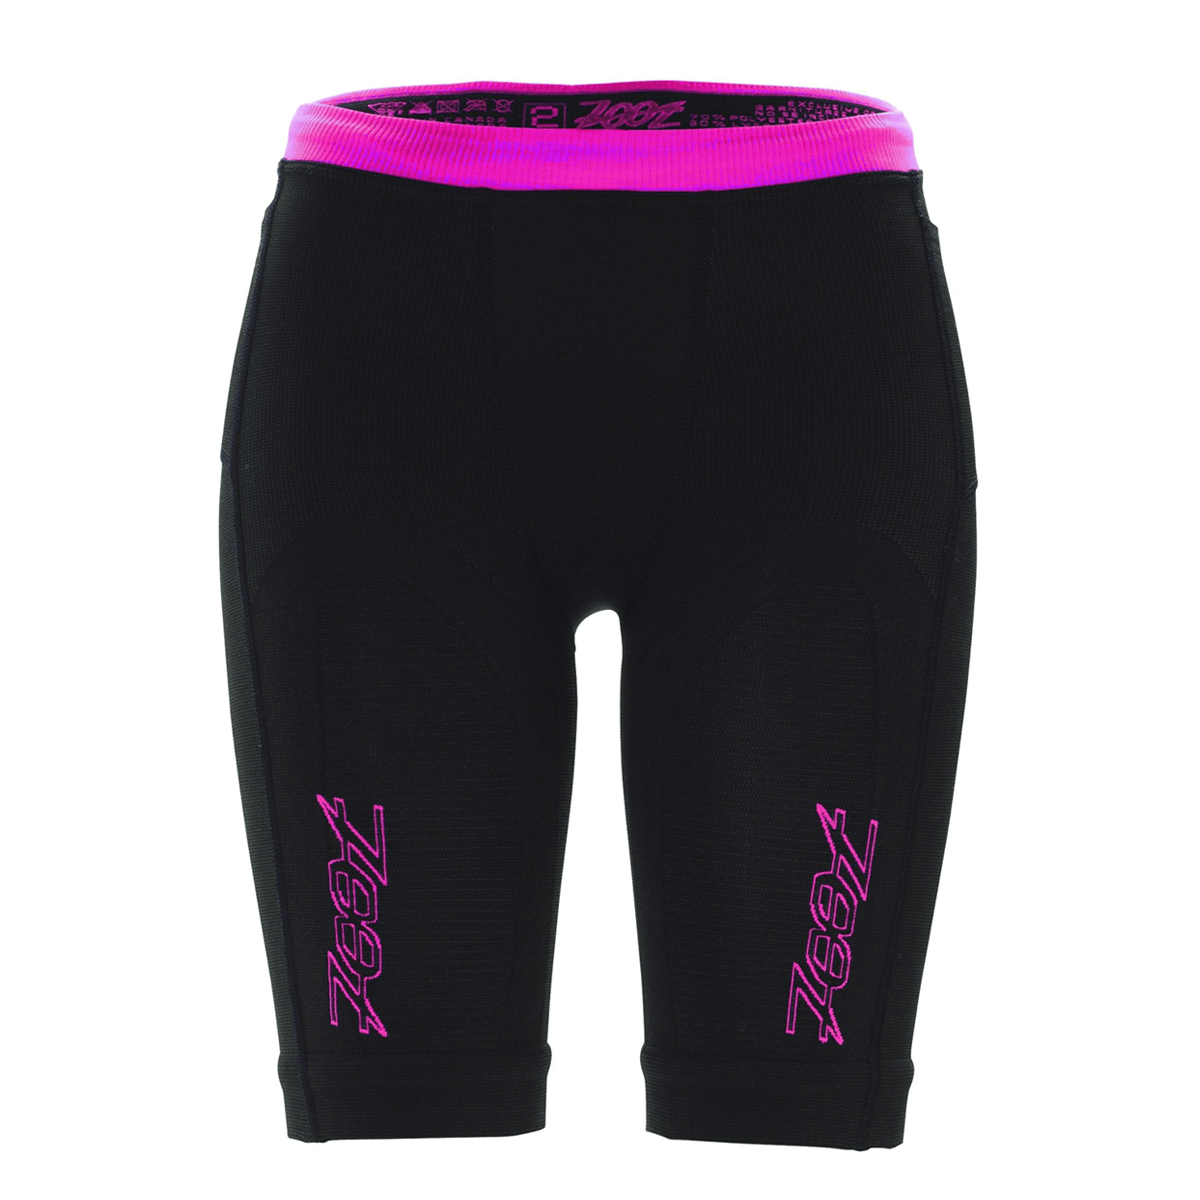 Women's Ultra 2.0 CRX Short - Black/Pink Glow